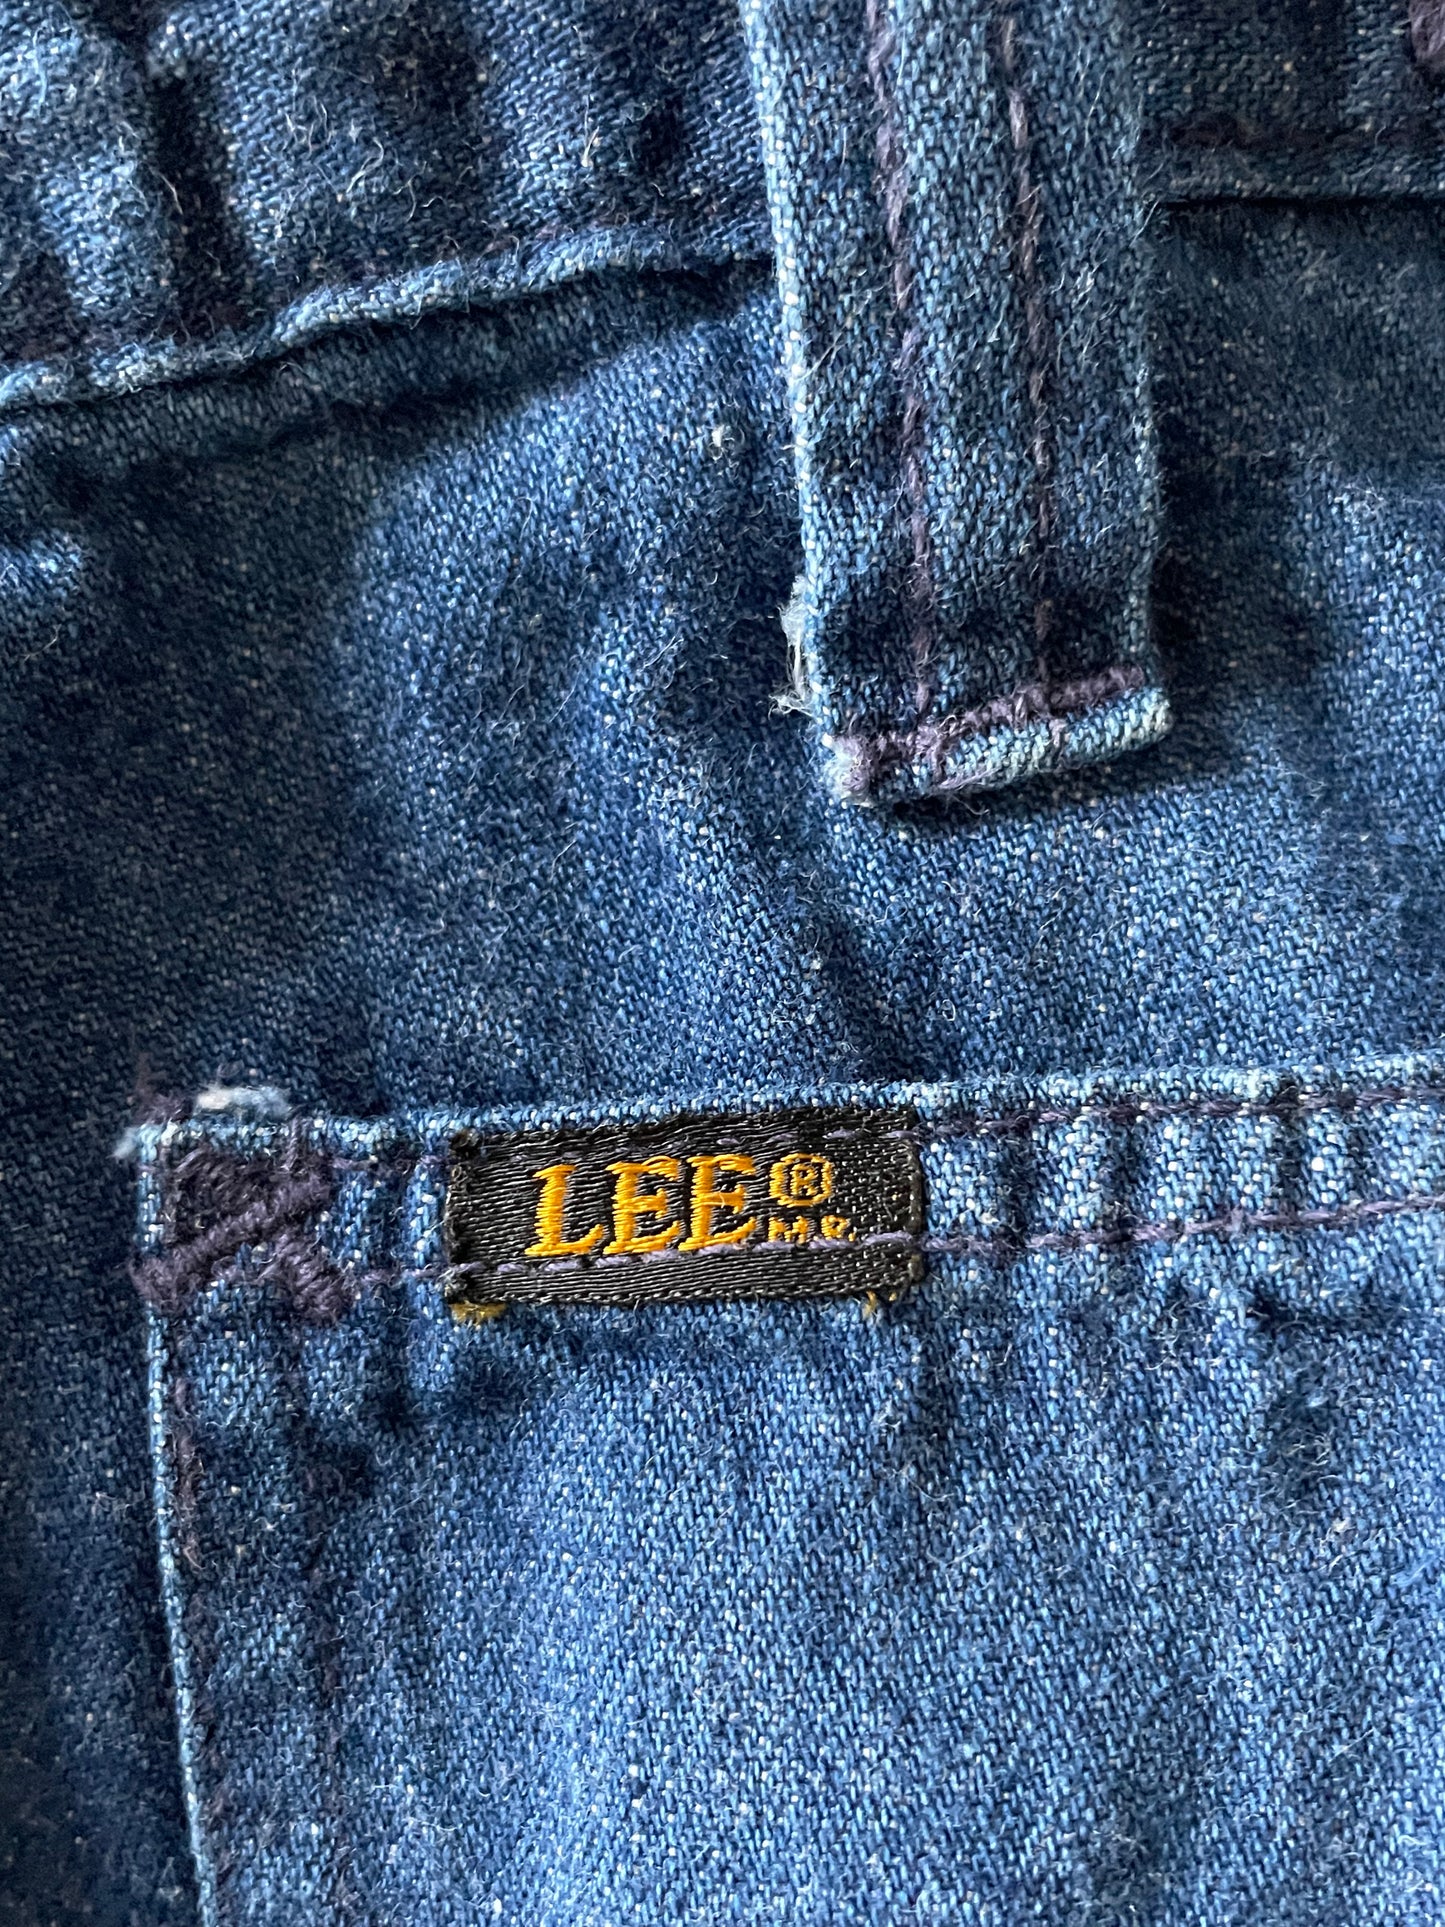 70s Lee Bell Bottom Jeans